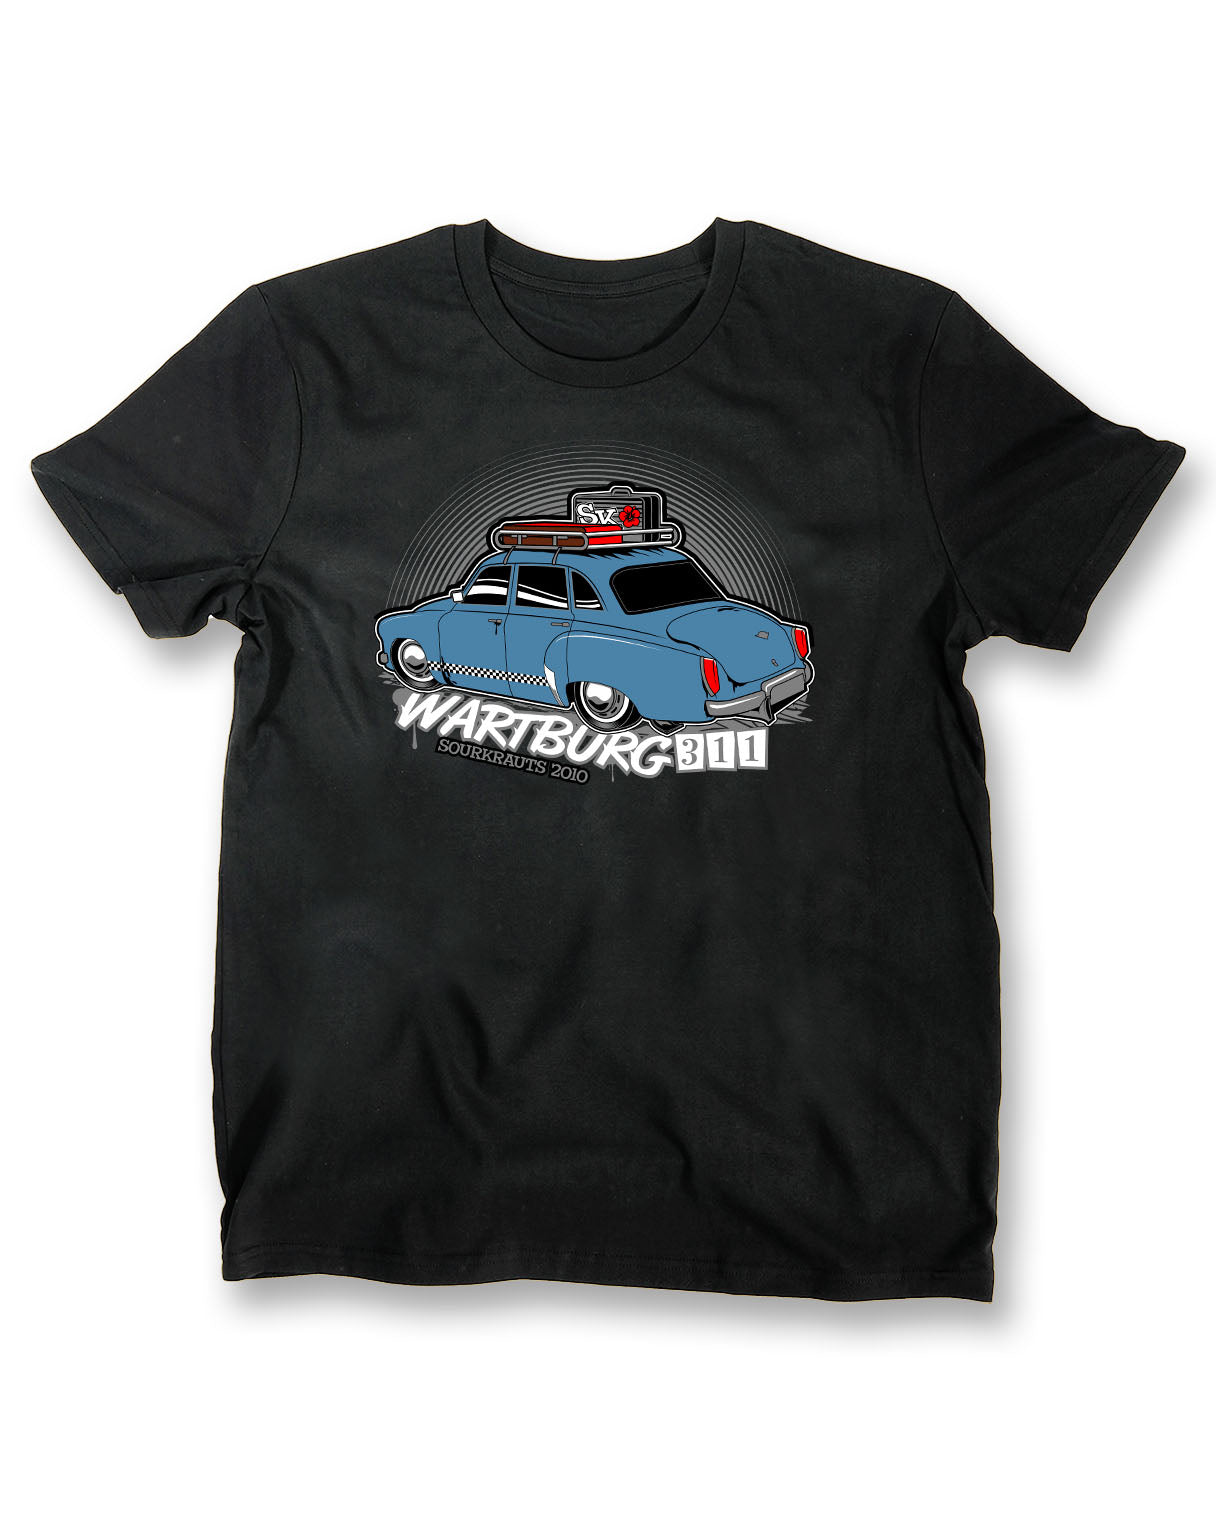 Wartburg 311 I T-Shirt I 2011